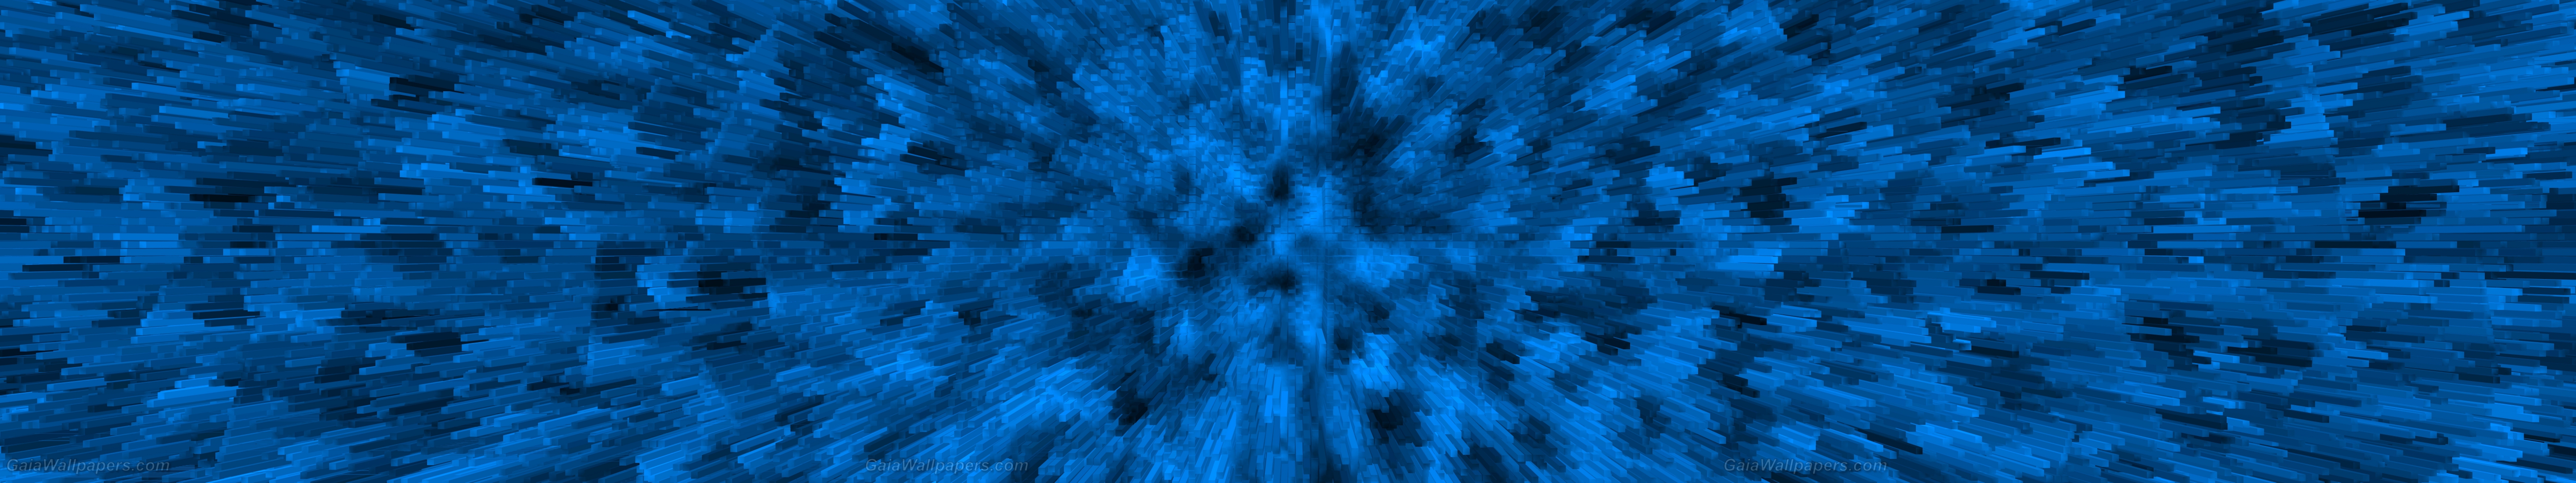 Digital blue explosion - Free desktop wallpapers